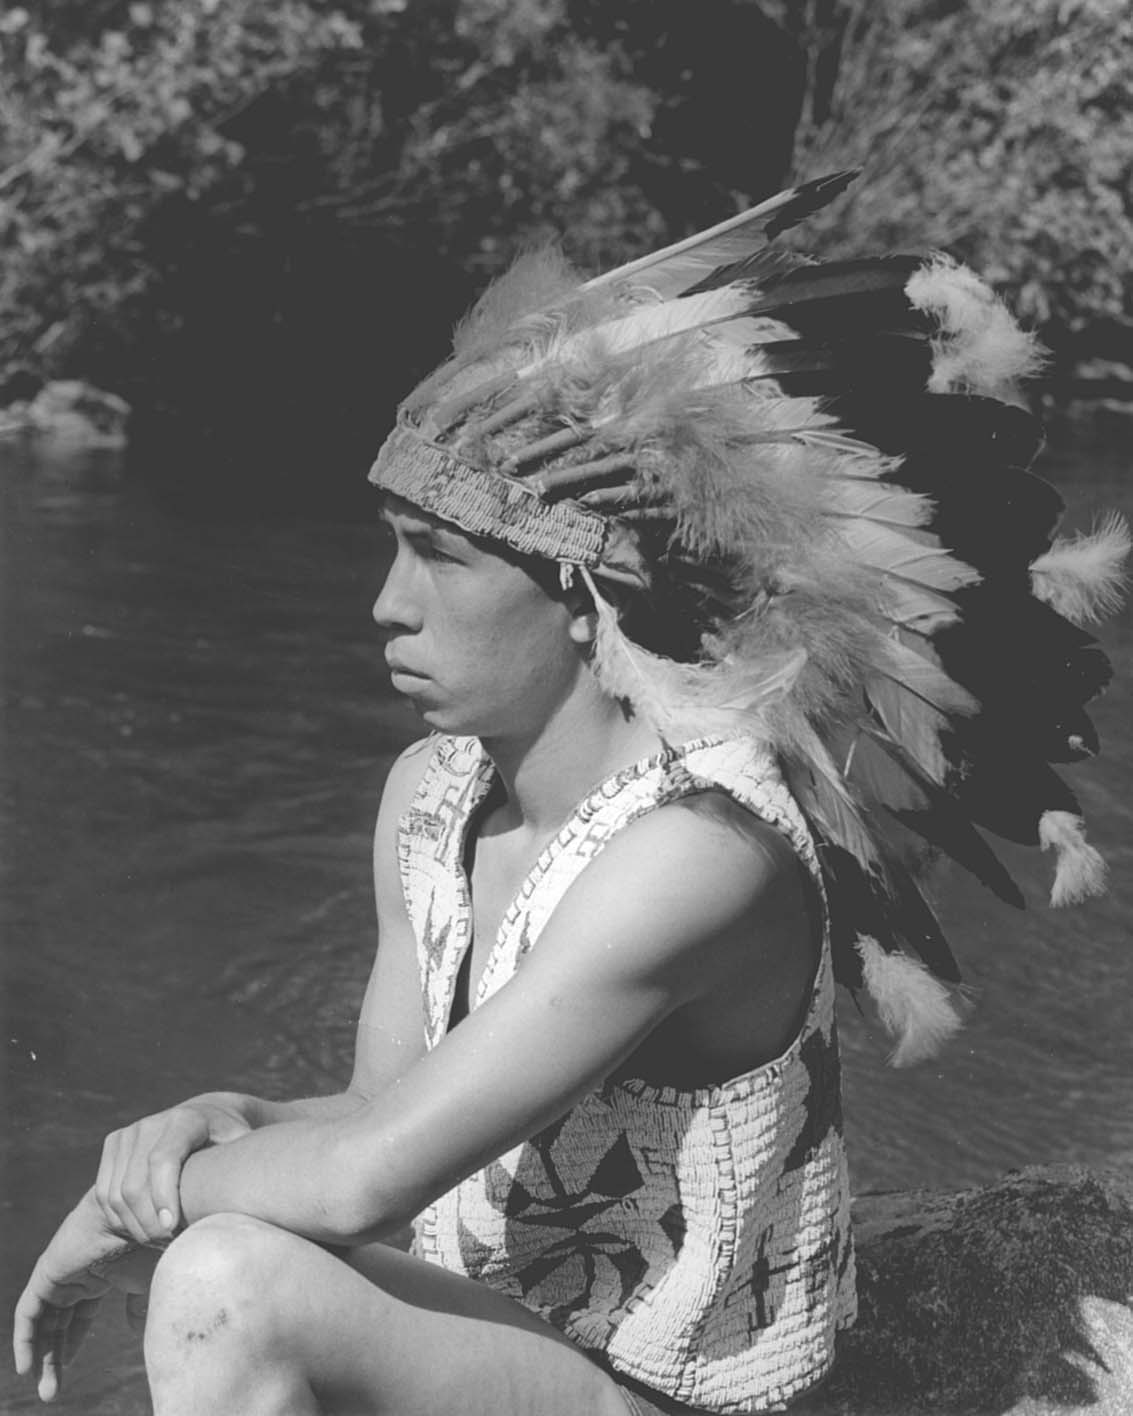 native american cherokee indian clothing